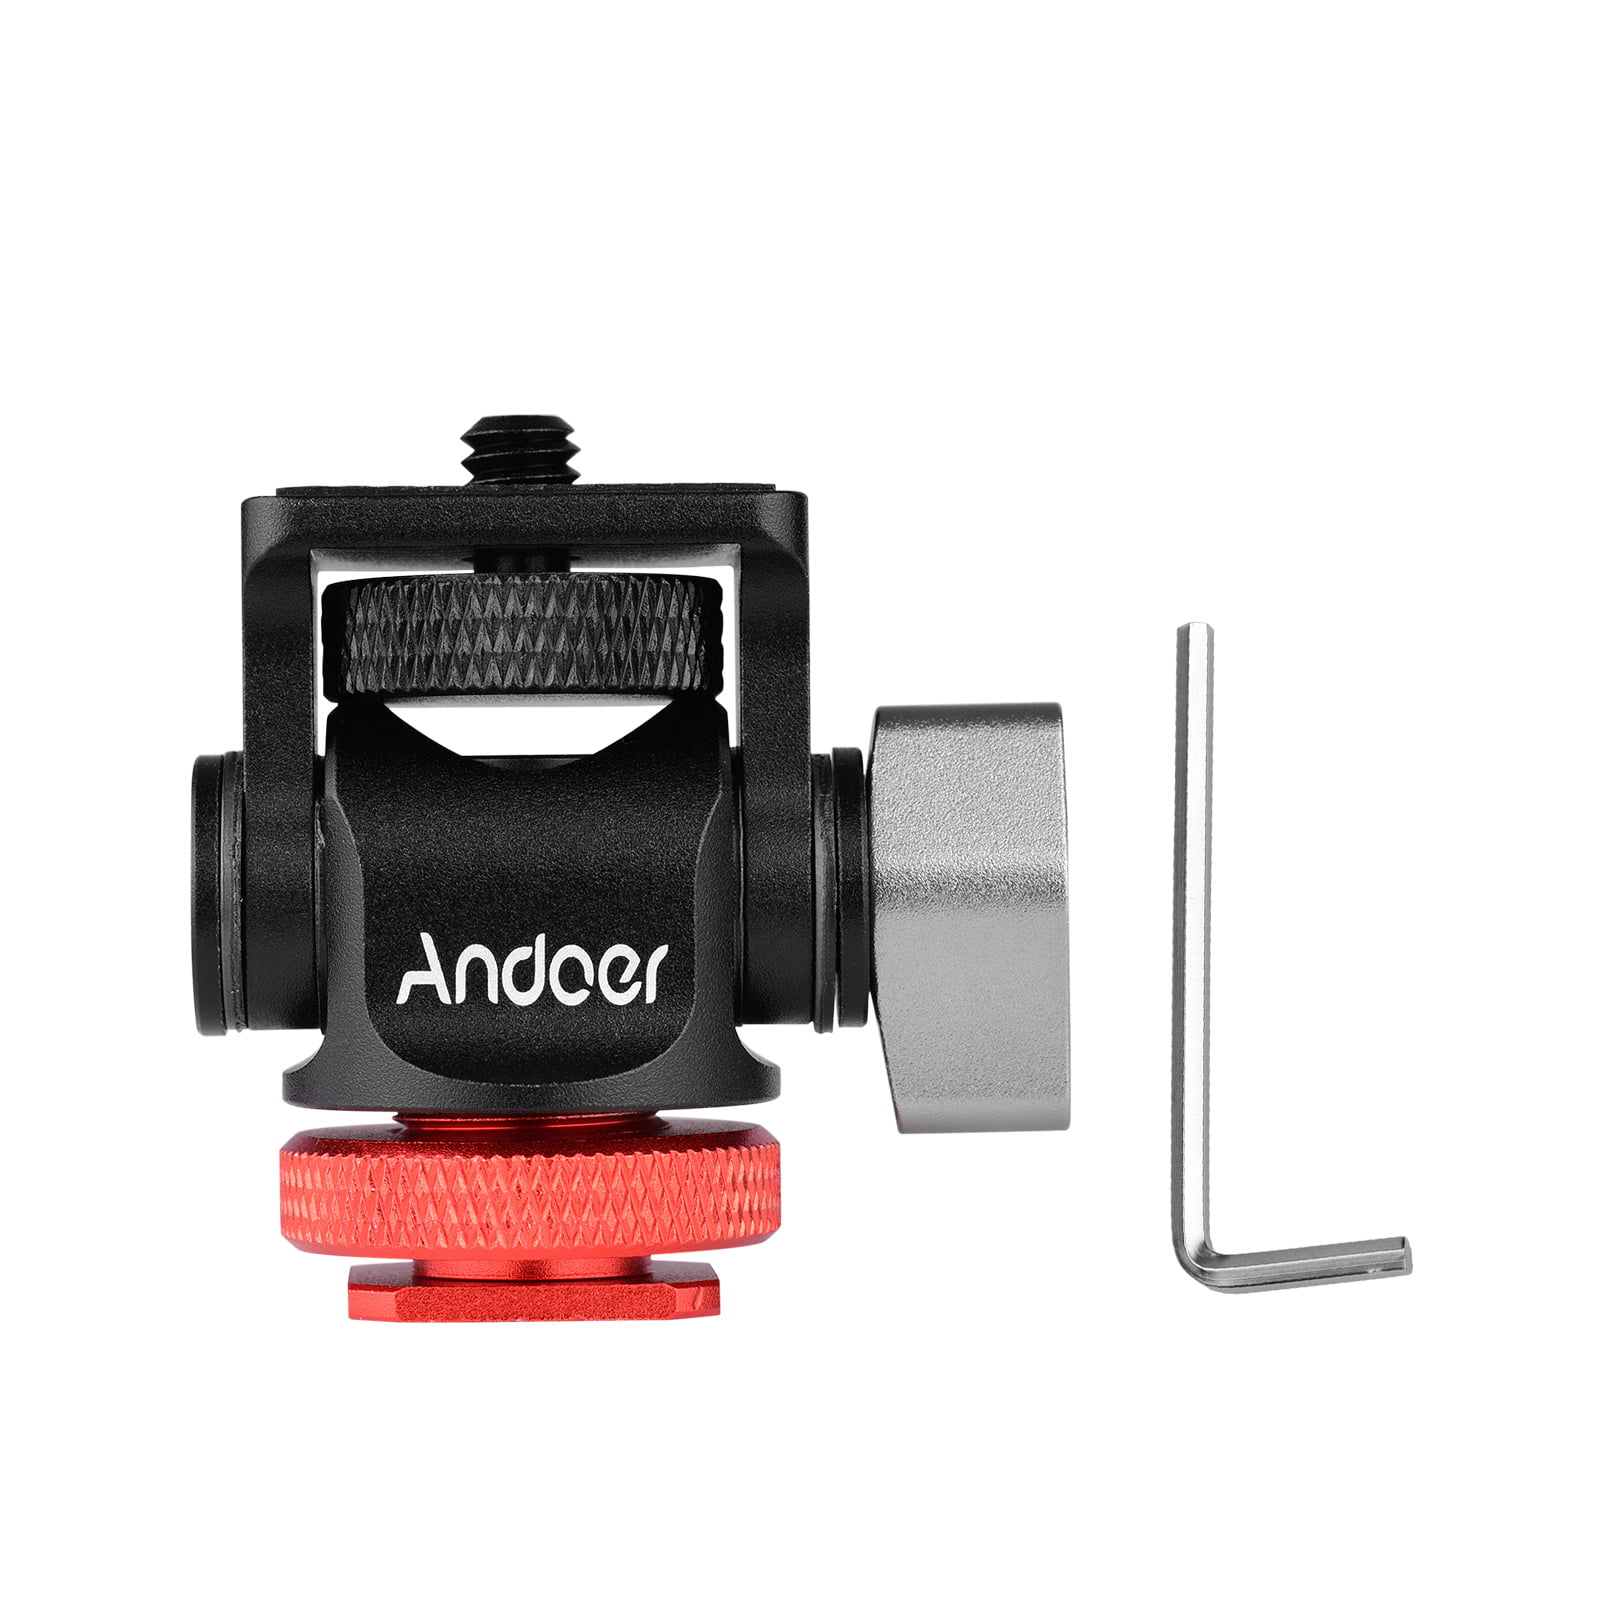 Andoer 2 in 1 Mini Cold Shoe Ball Head Dual Use with 1/4 Screw Cold Shoe U7O1